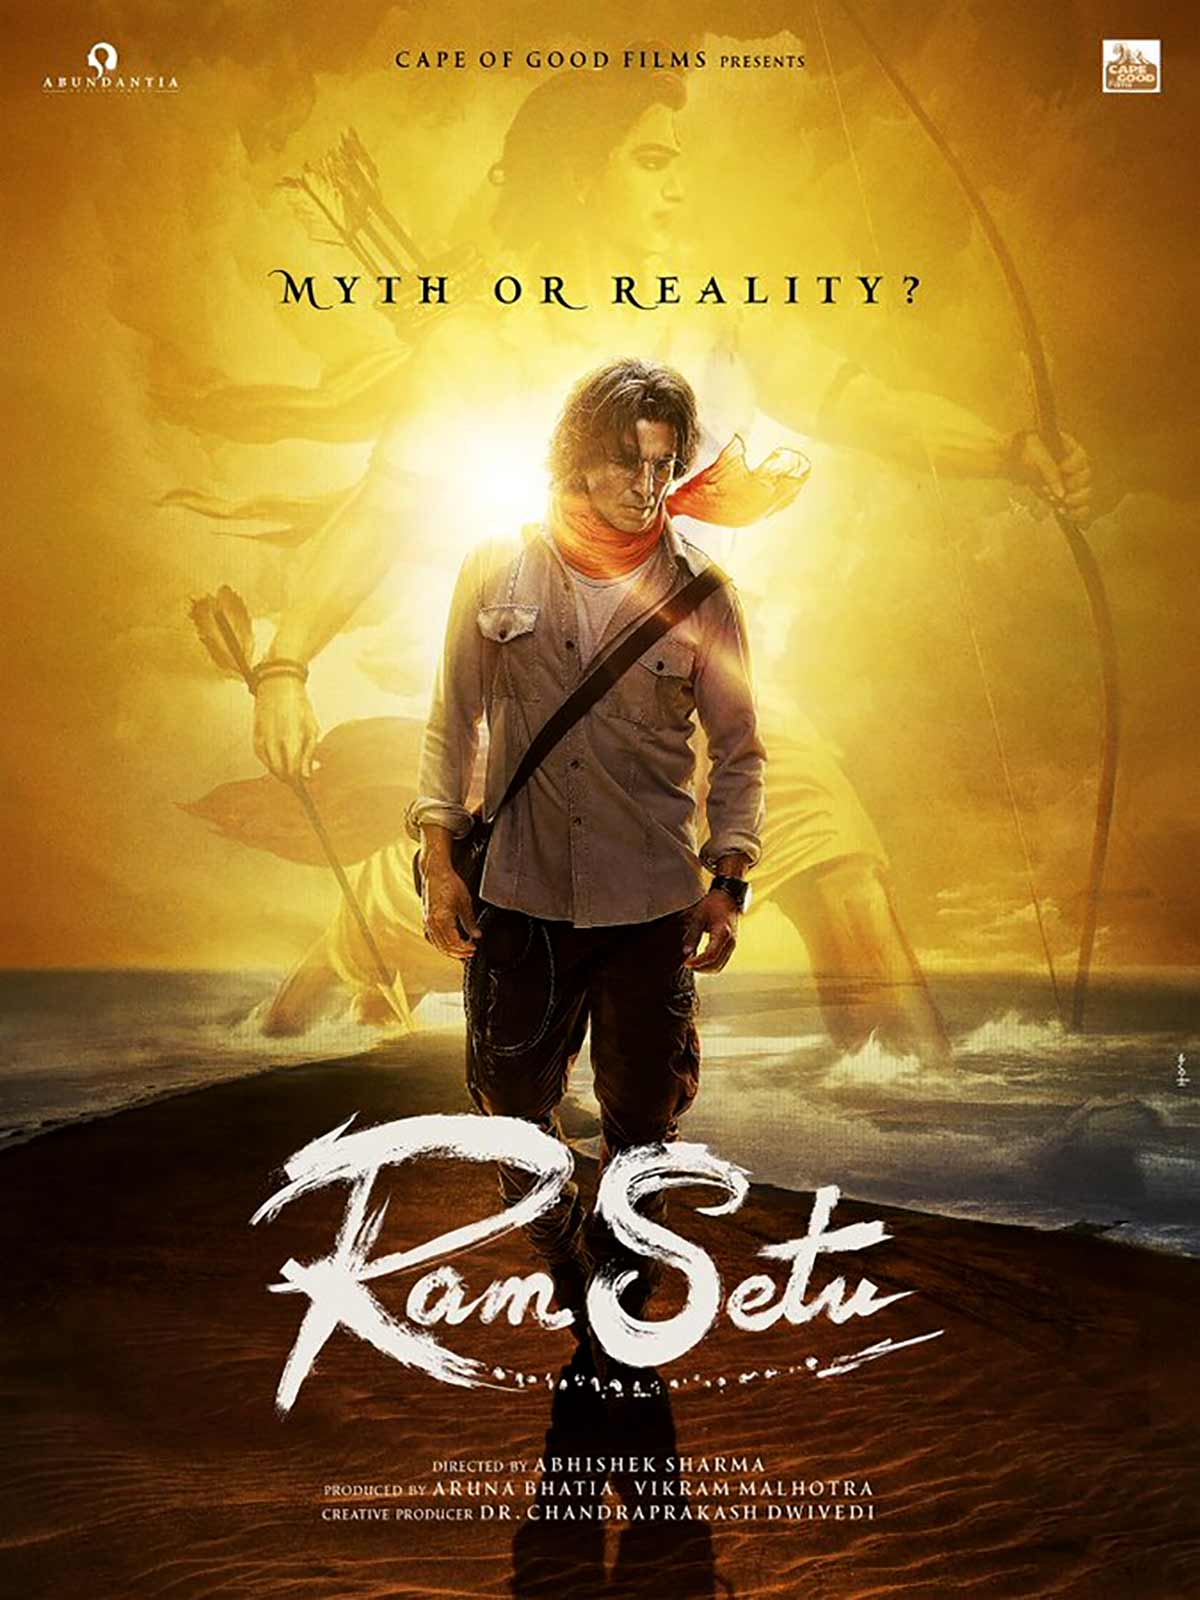 \Laxmii bombs, Akshay moves to Ram Setu - Rediff.com movies